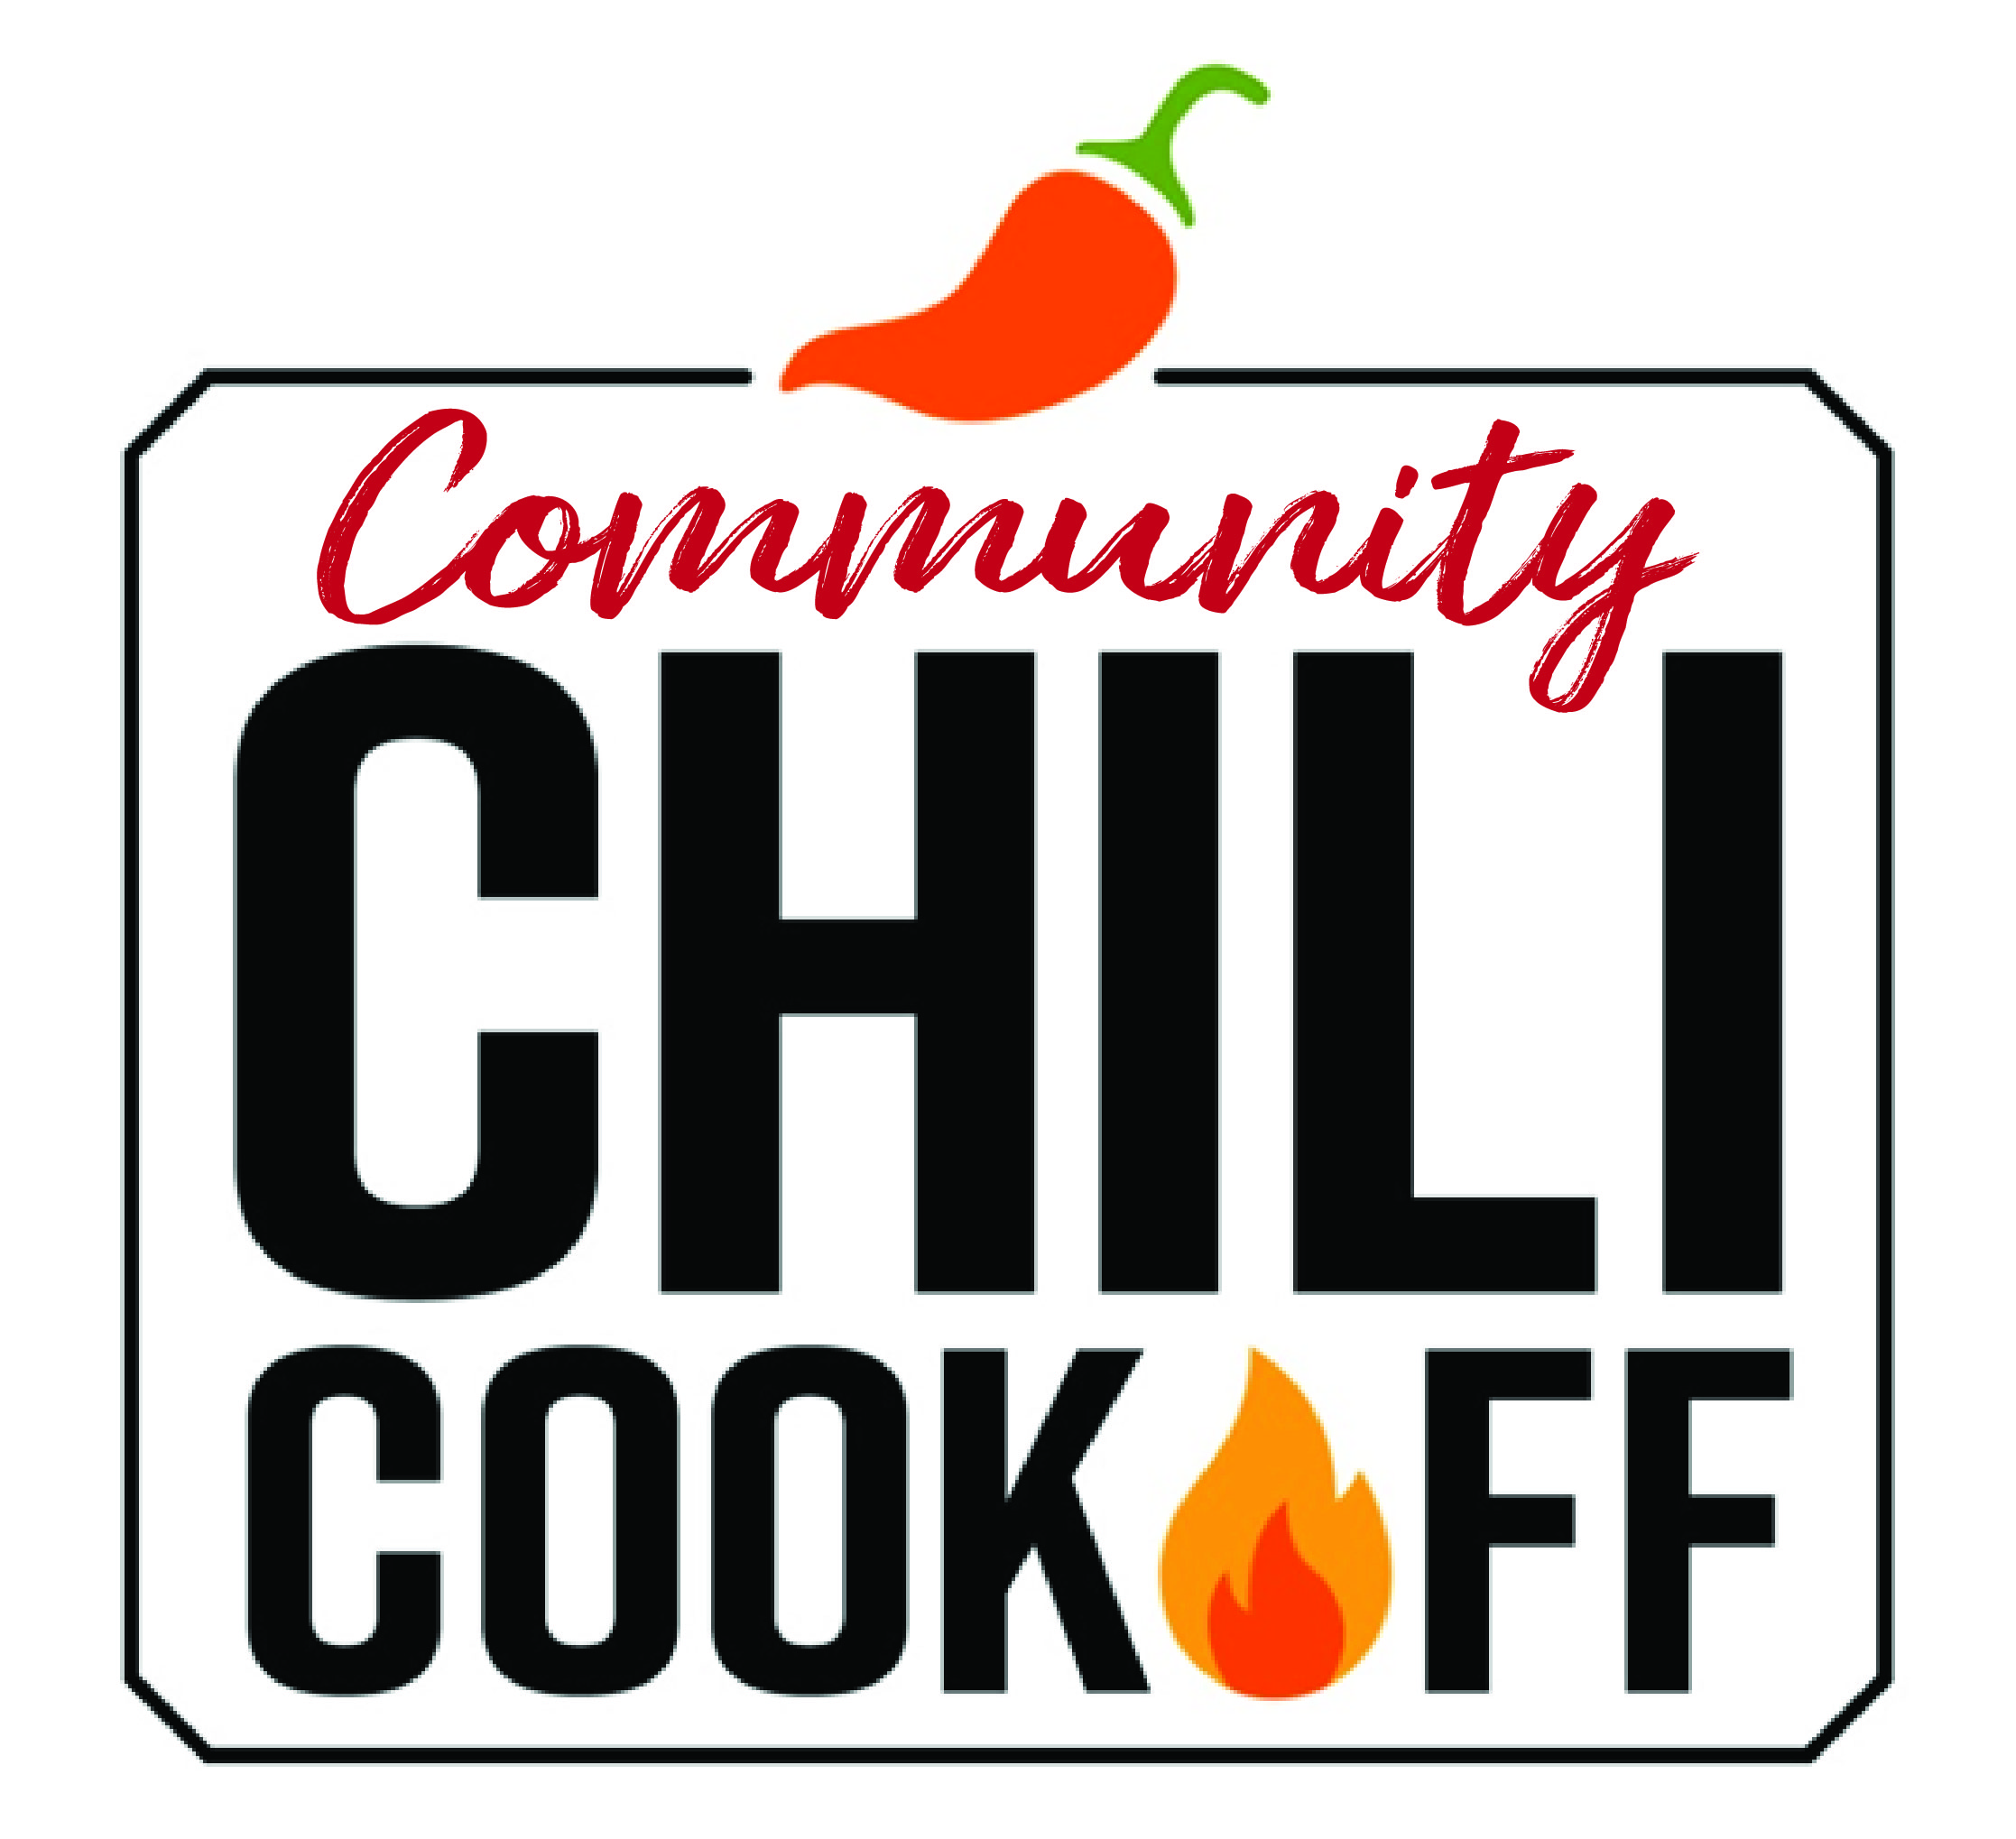 chili cook off